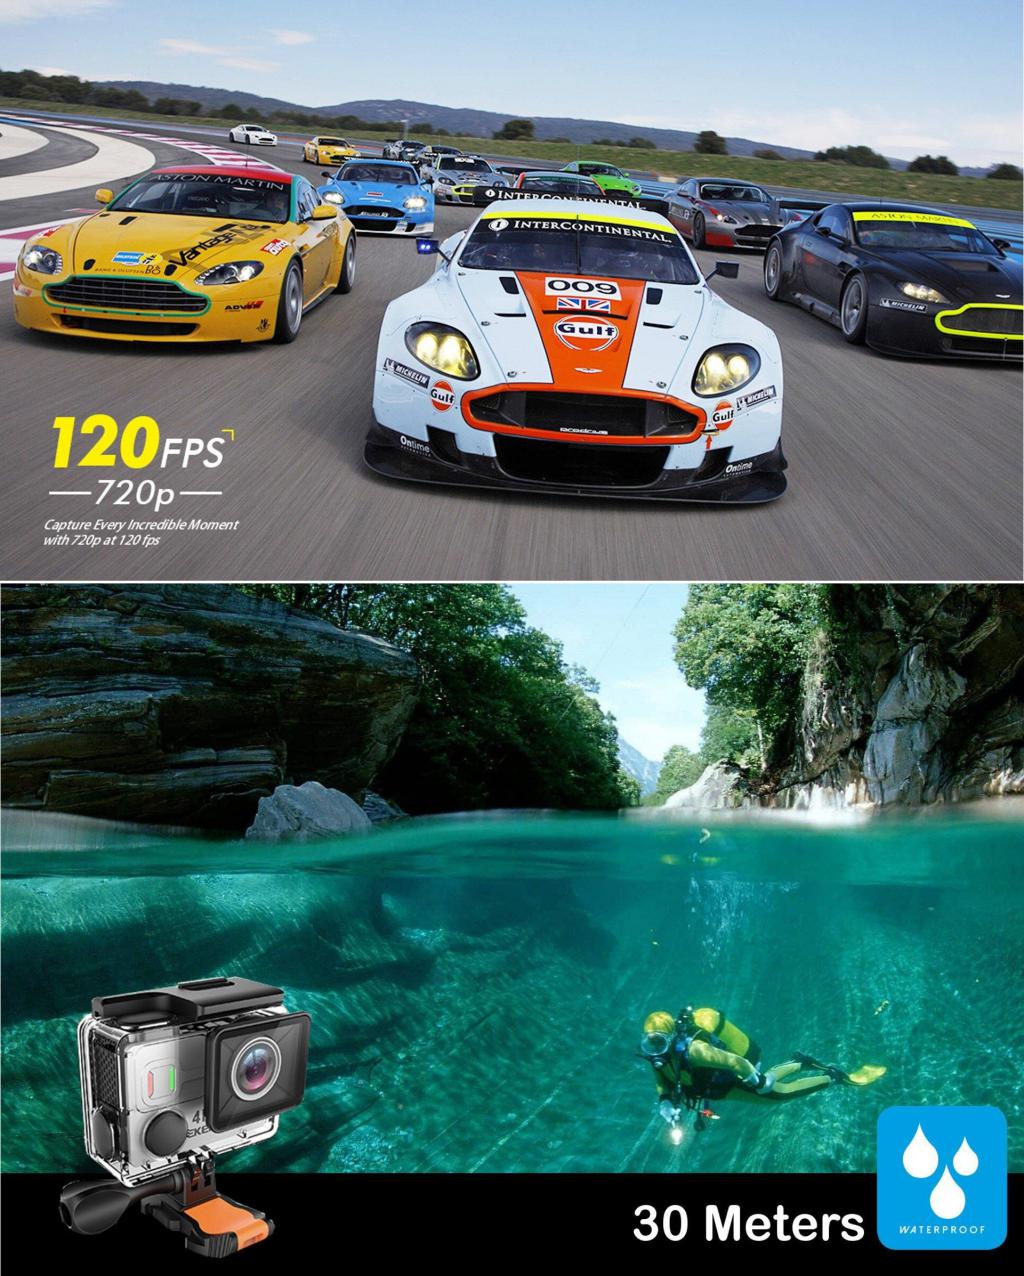 Eken H7s 4k Waterproof Action Camera (2)